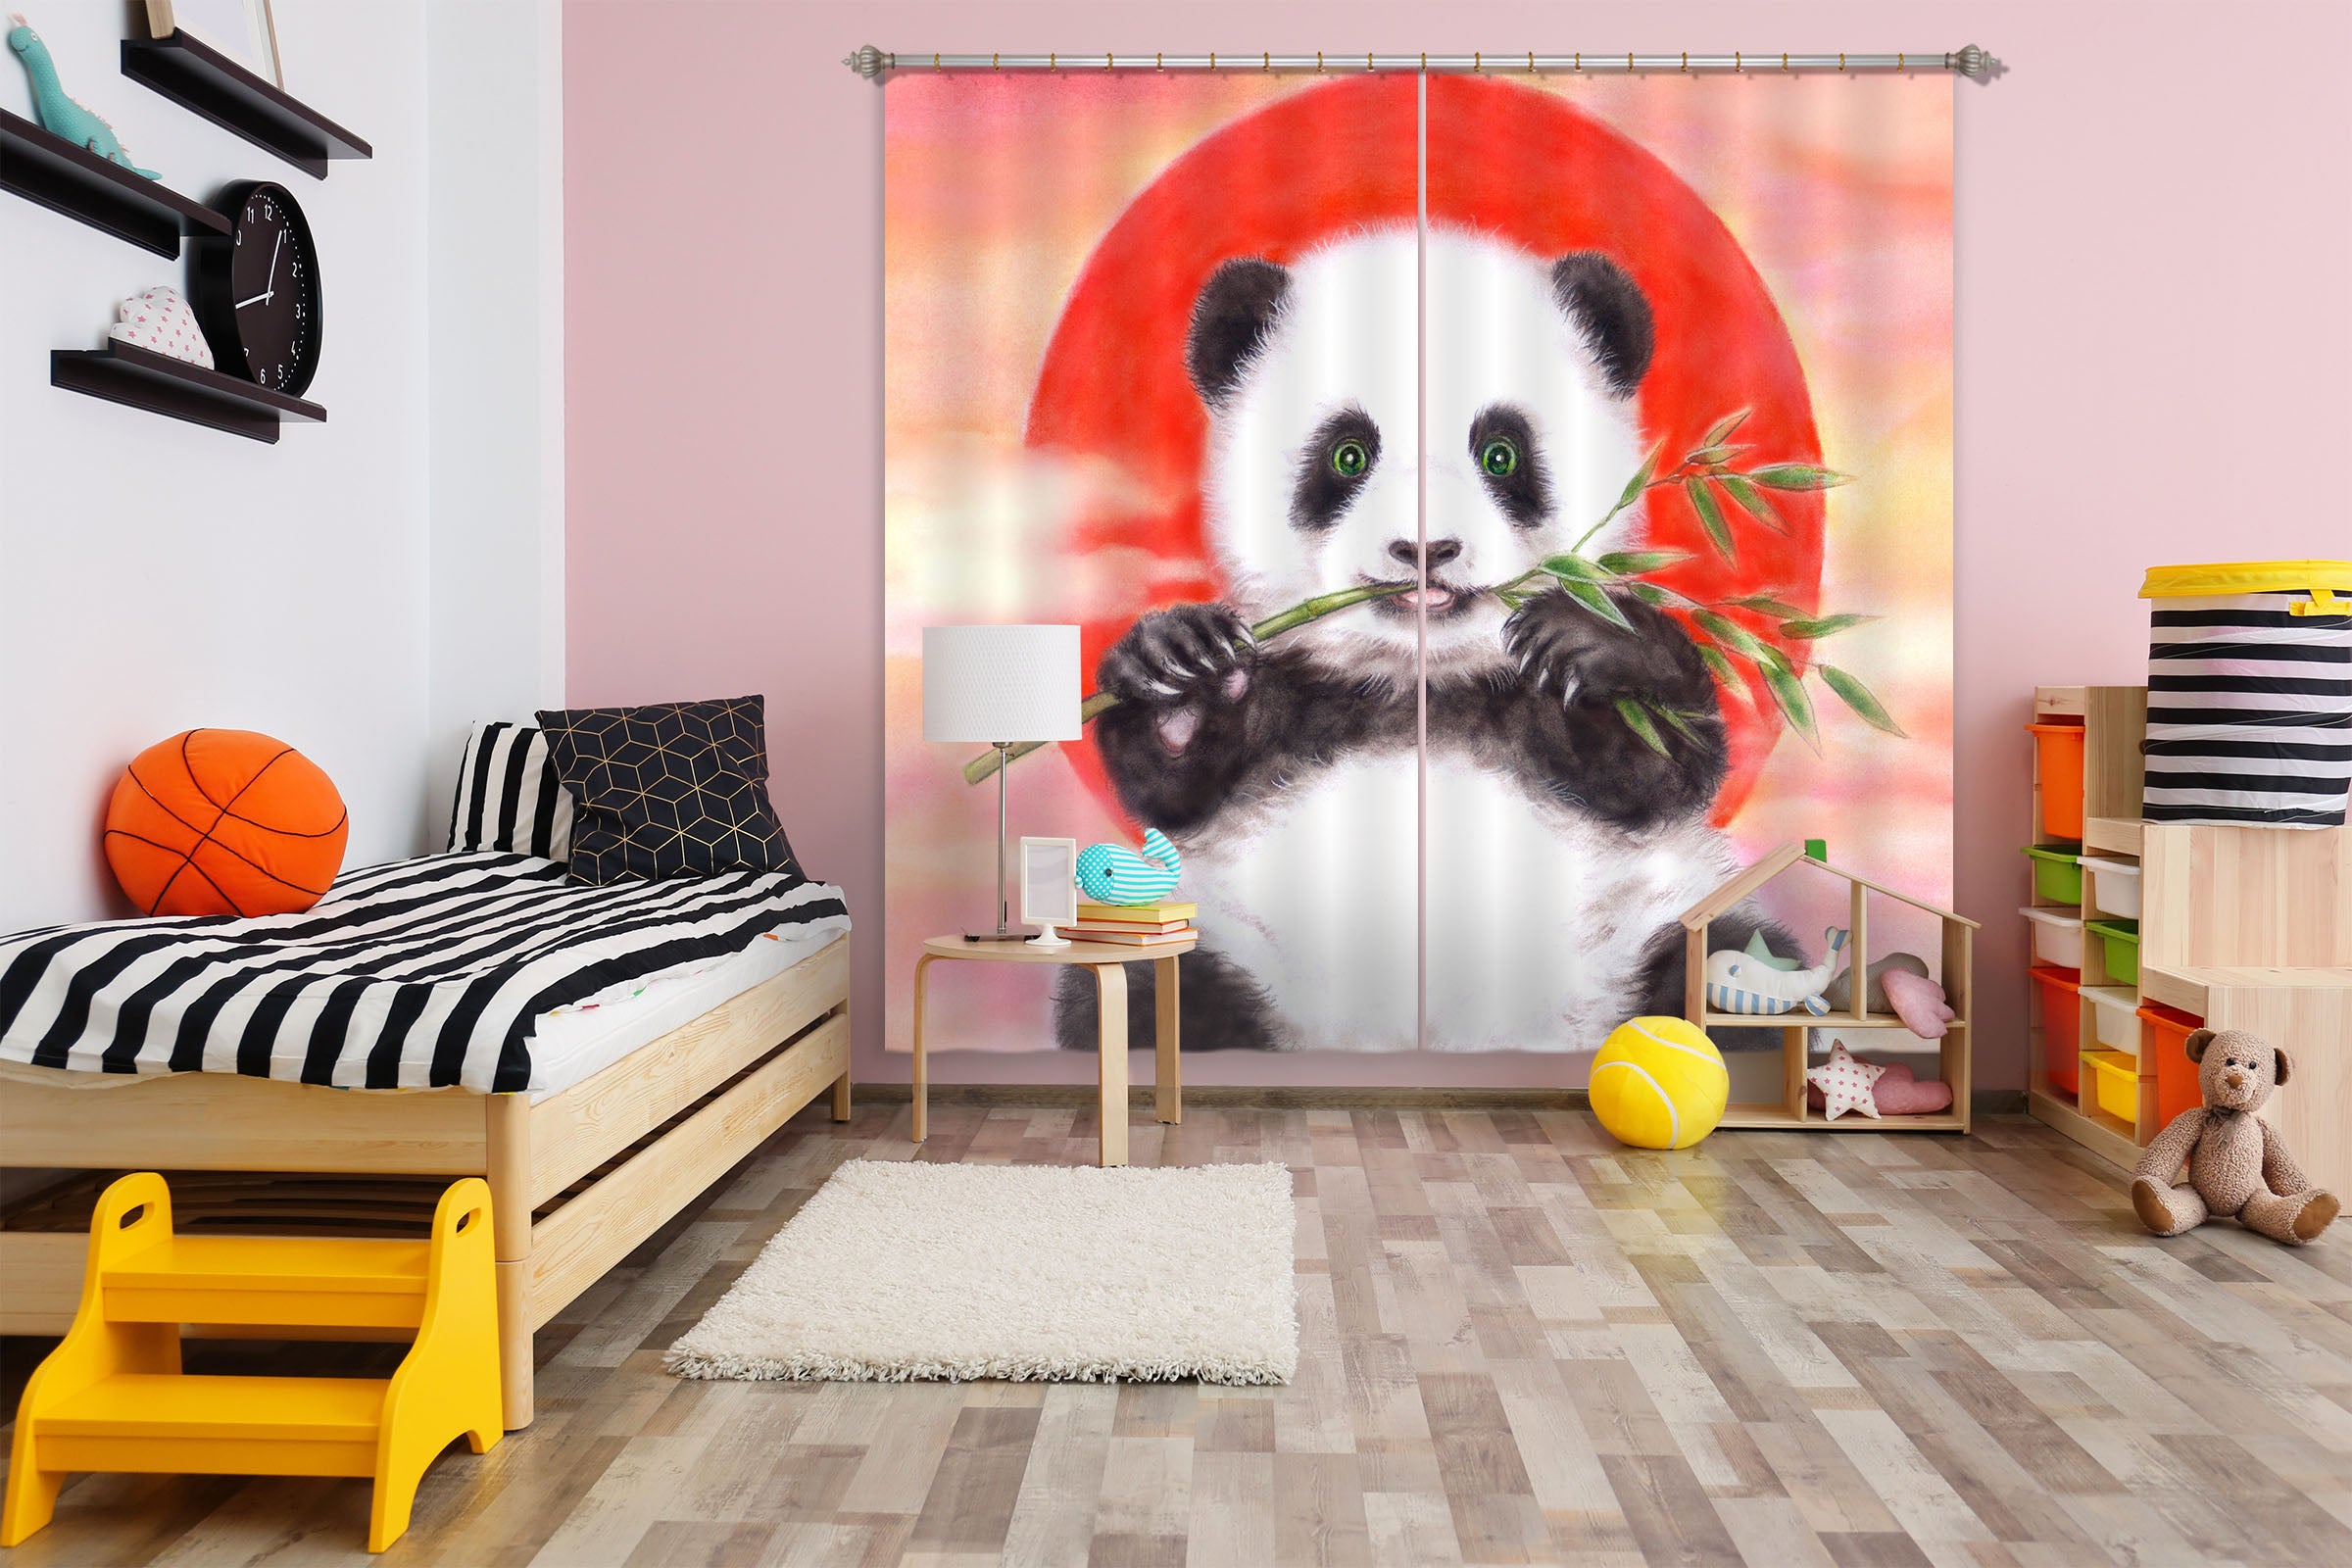 3D Sun Panda 9042 Kayomi Harai Curtain Curtains Drapes